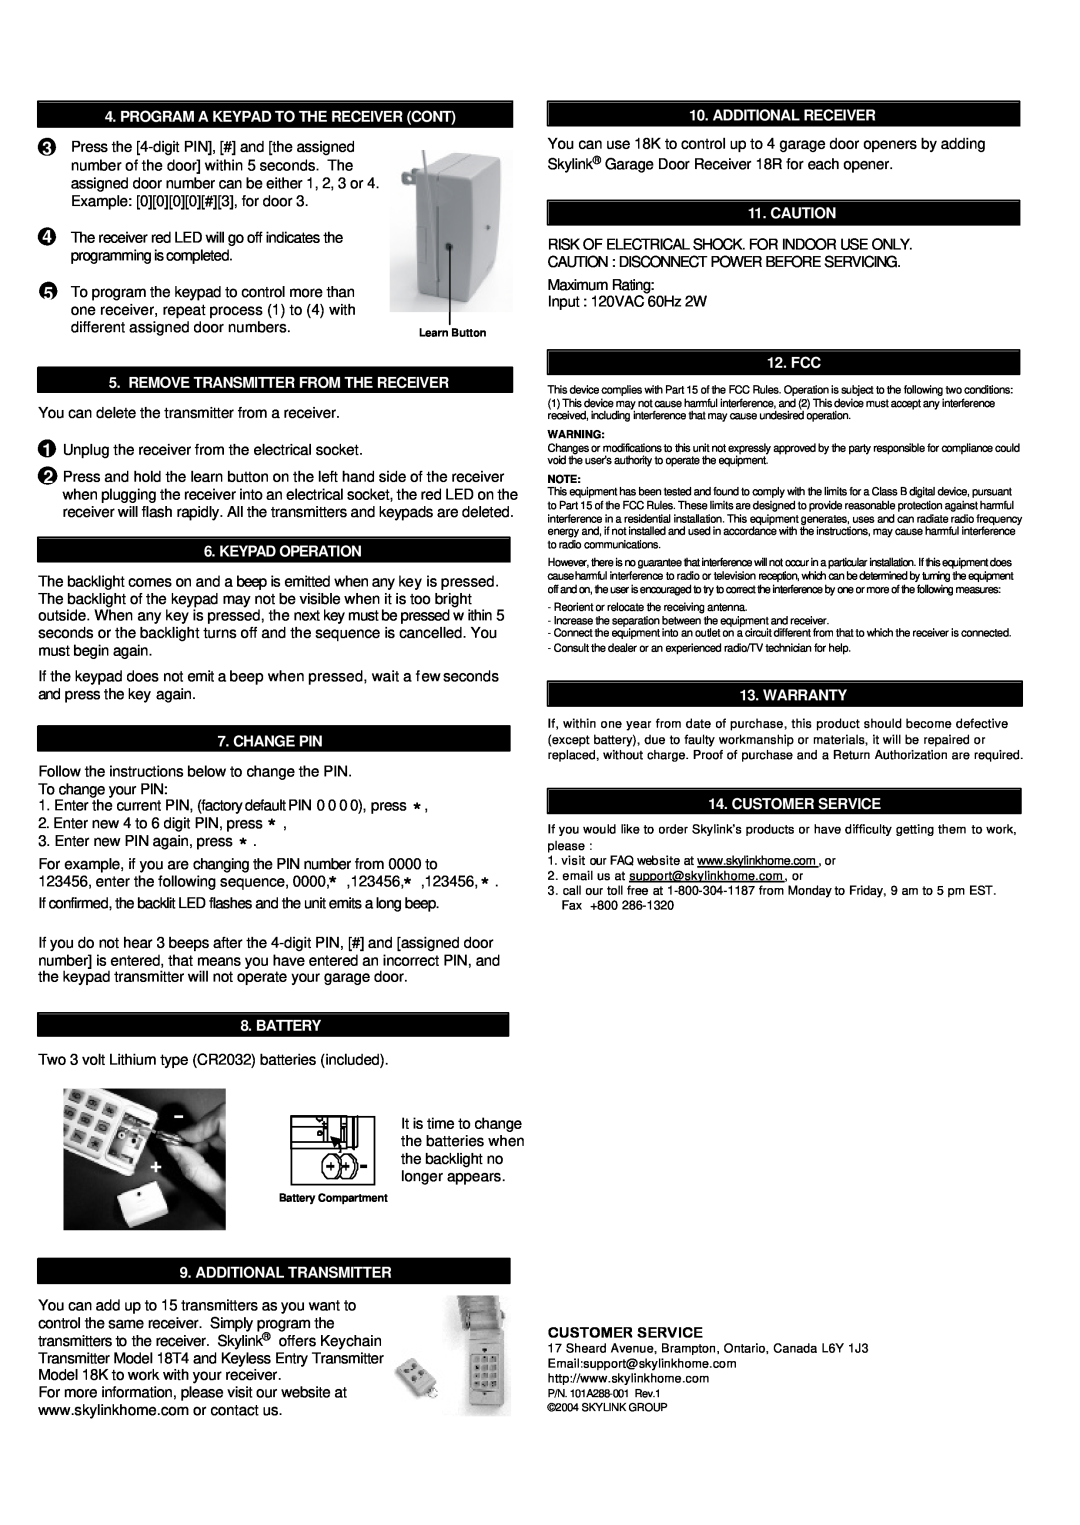 SkyLink 18KR manual different assigned door numbers, Customer Service 